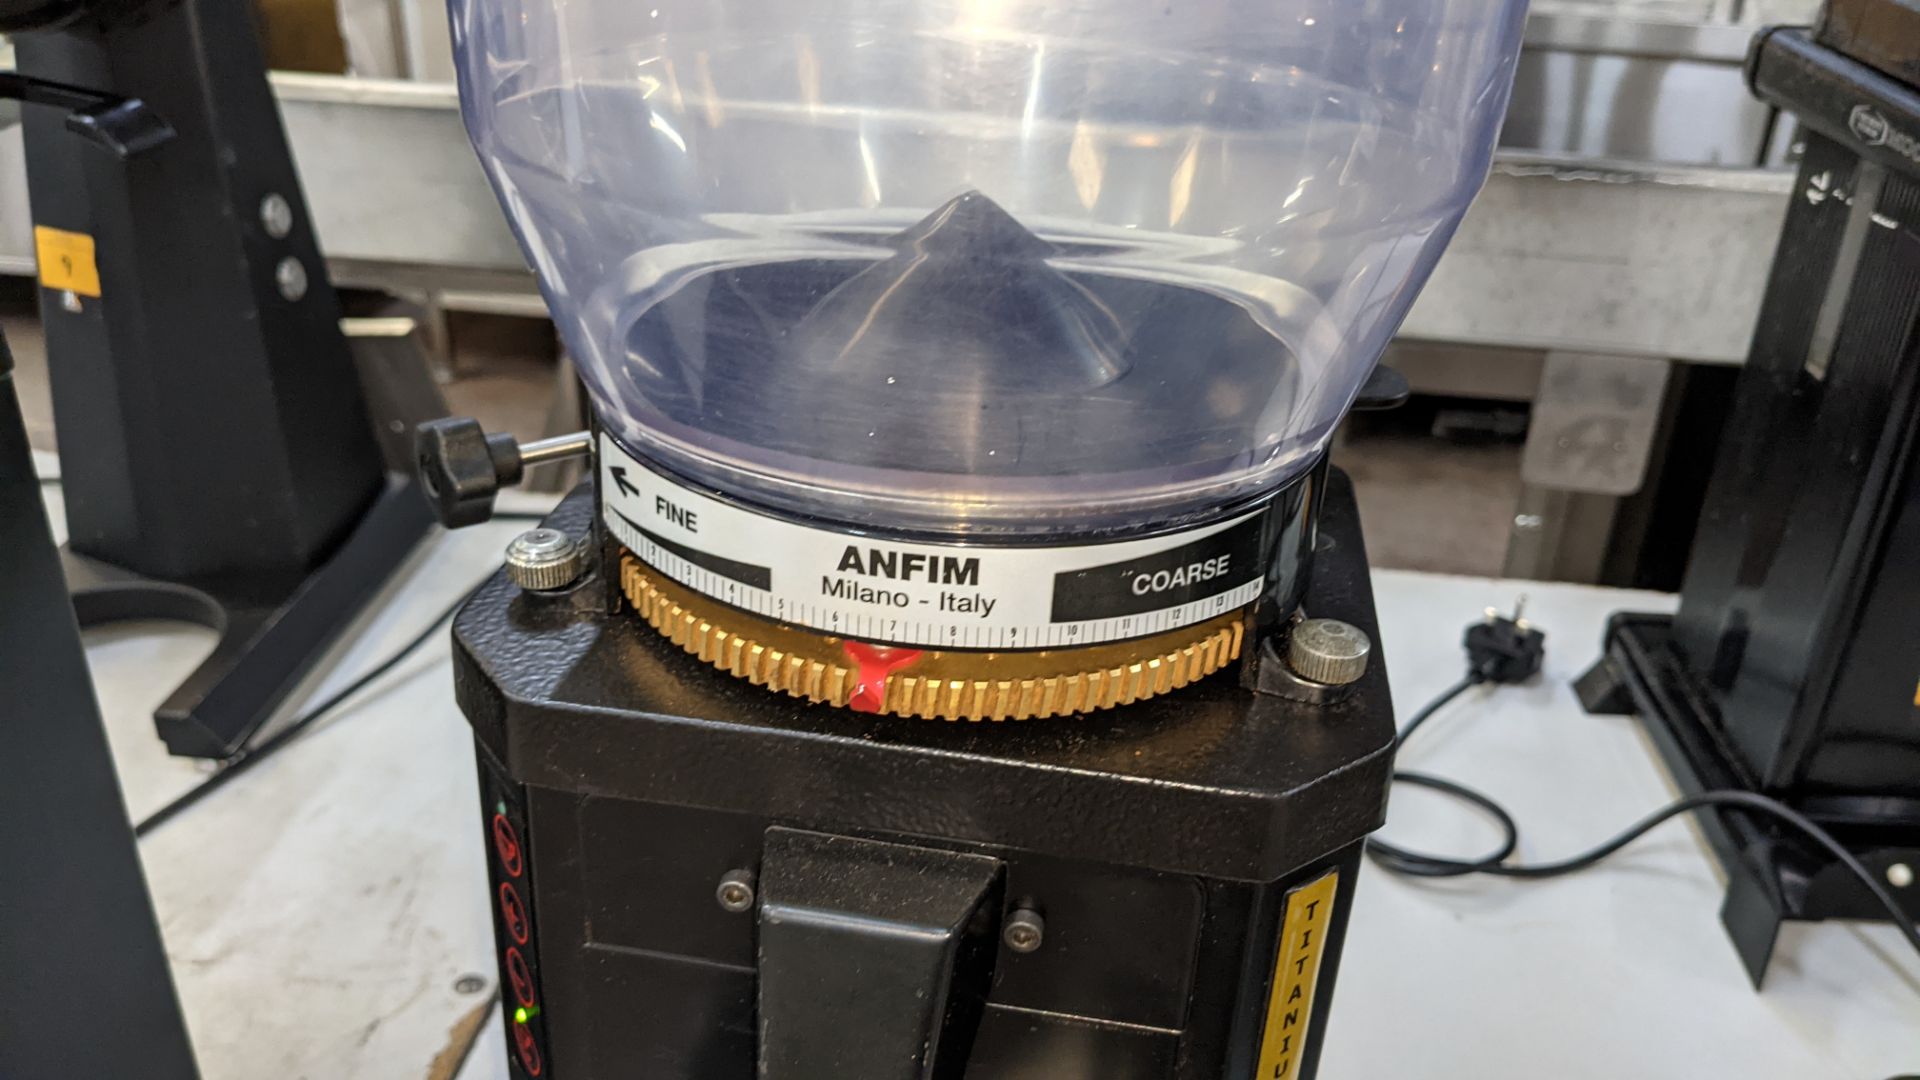 2019 Anfim model SPii titanium espresso grinder with digital display. Understood to have been purcha - Image 9 of 12